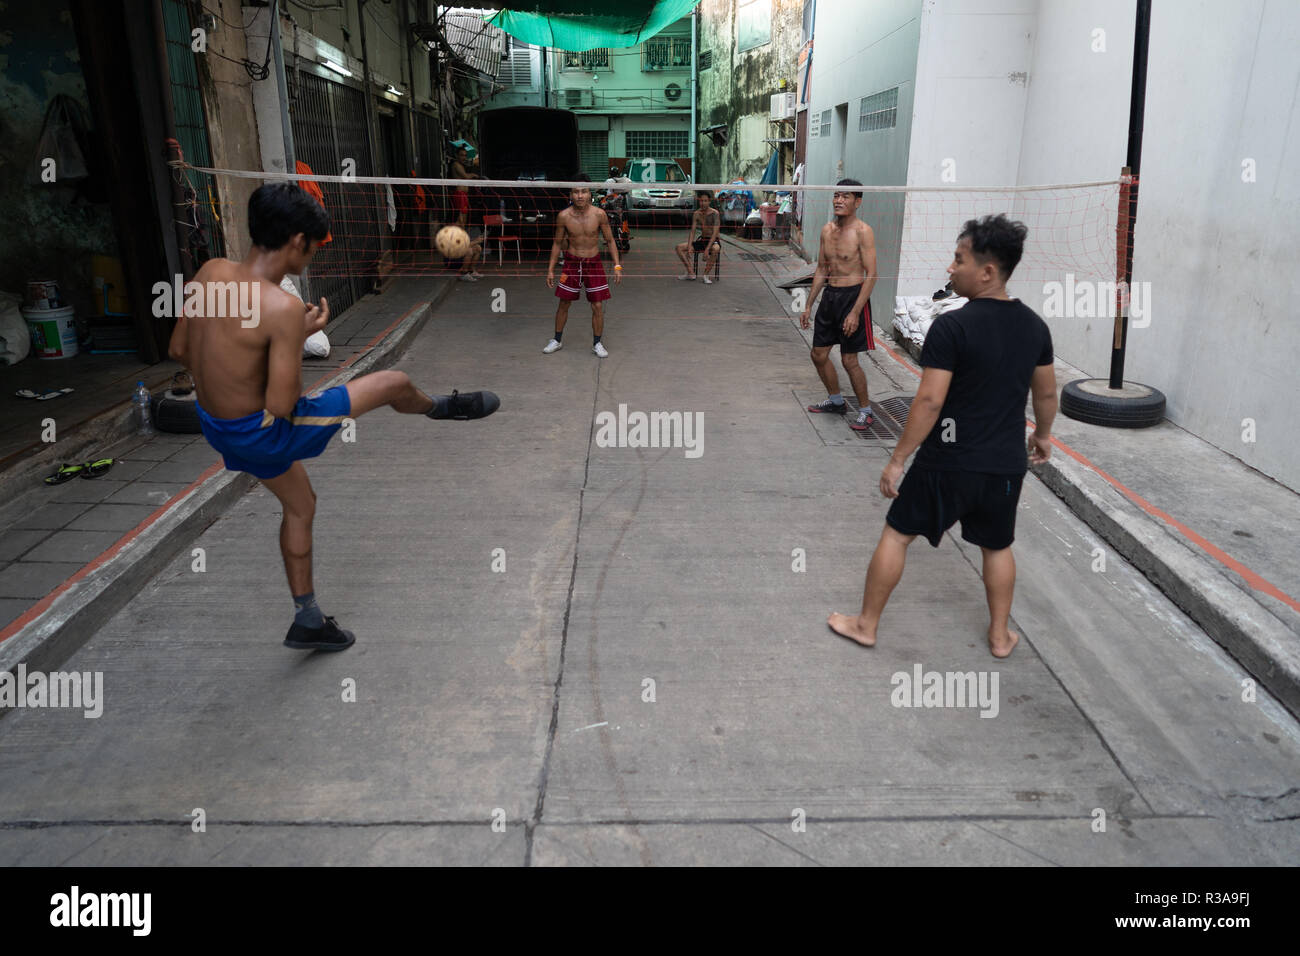 Men seen playing Sepak takraw or foot volleyball in Chinatown, Bangkok, Thailand. Daily life in Bangkok capital of Thailand. Stock Photo